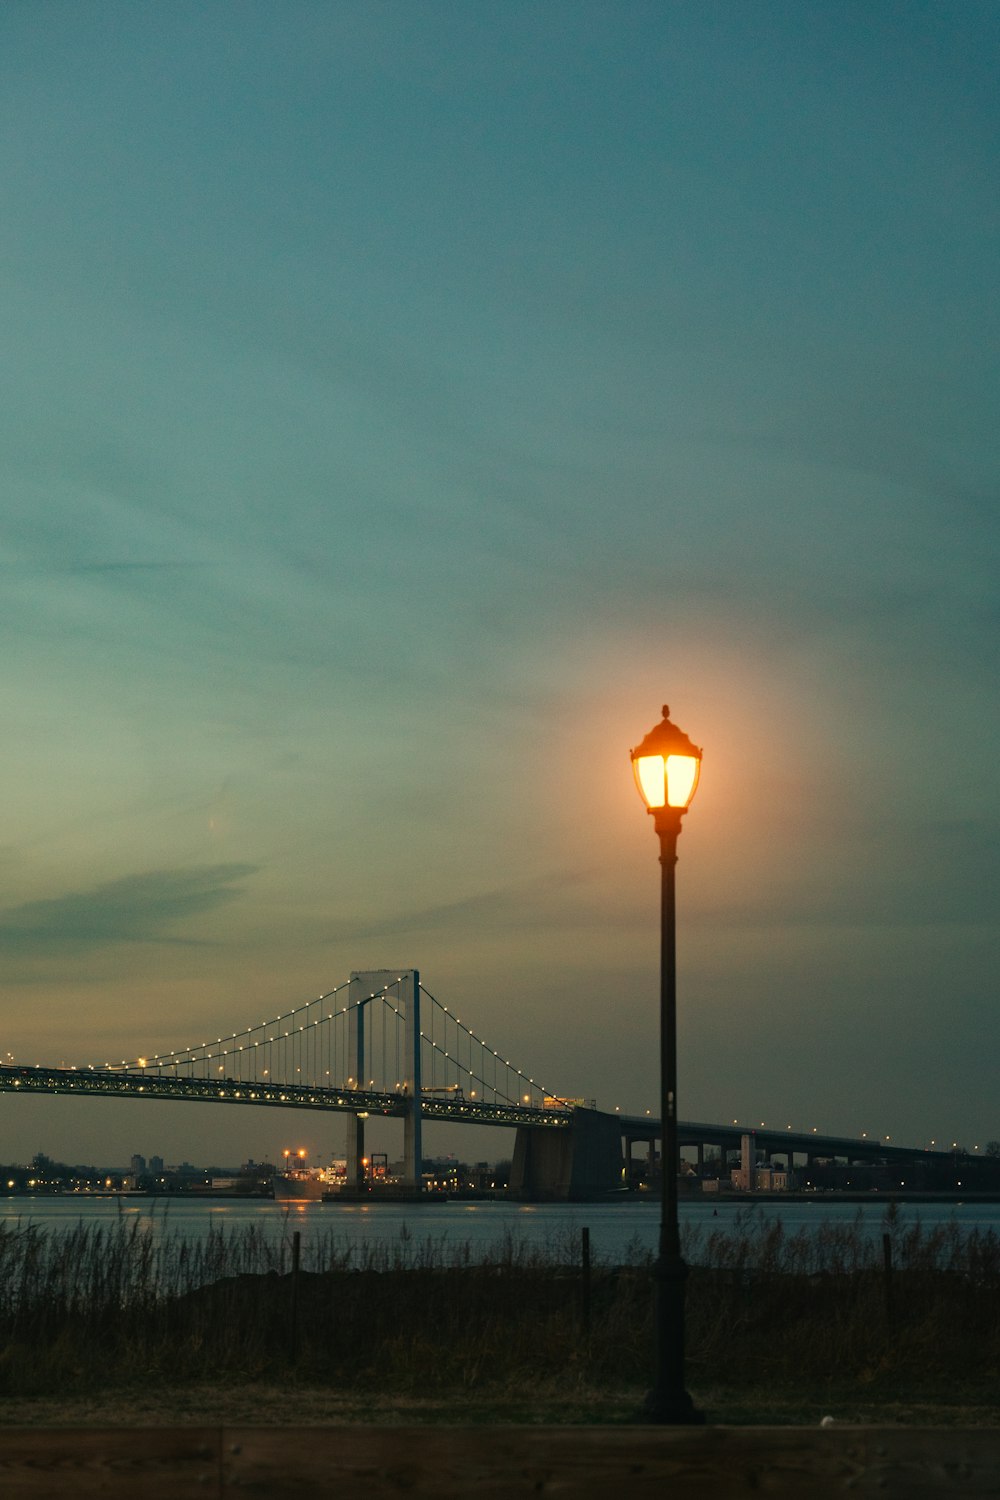 lighted post lamp near bridge during night time